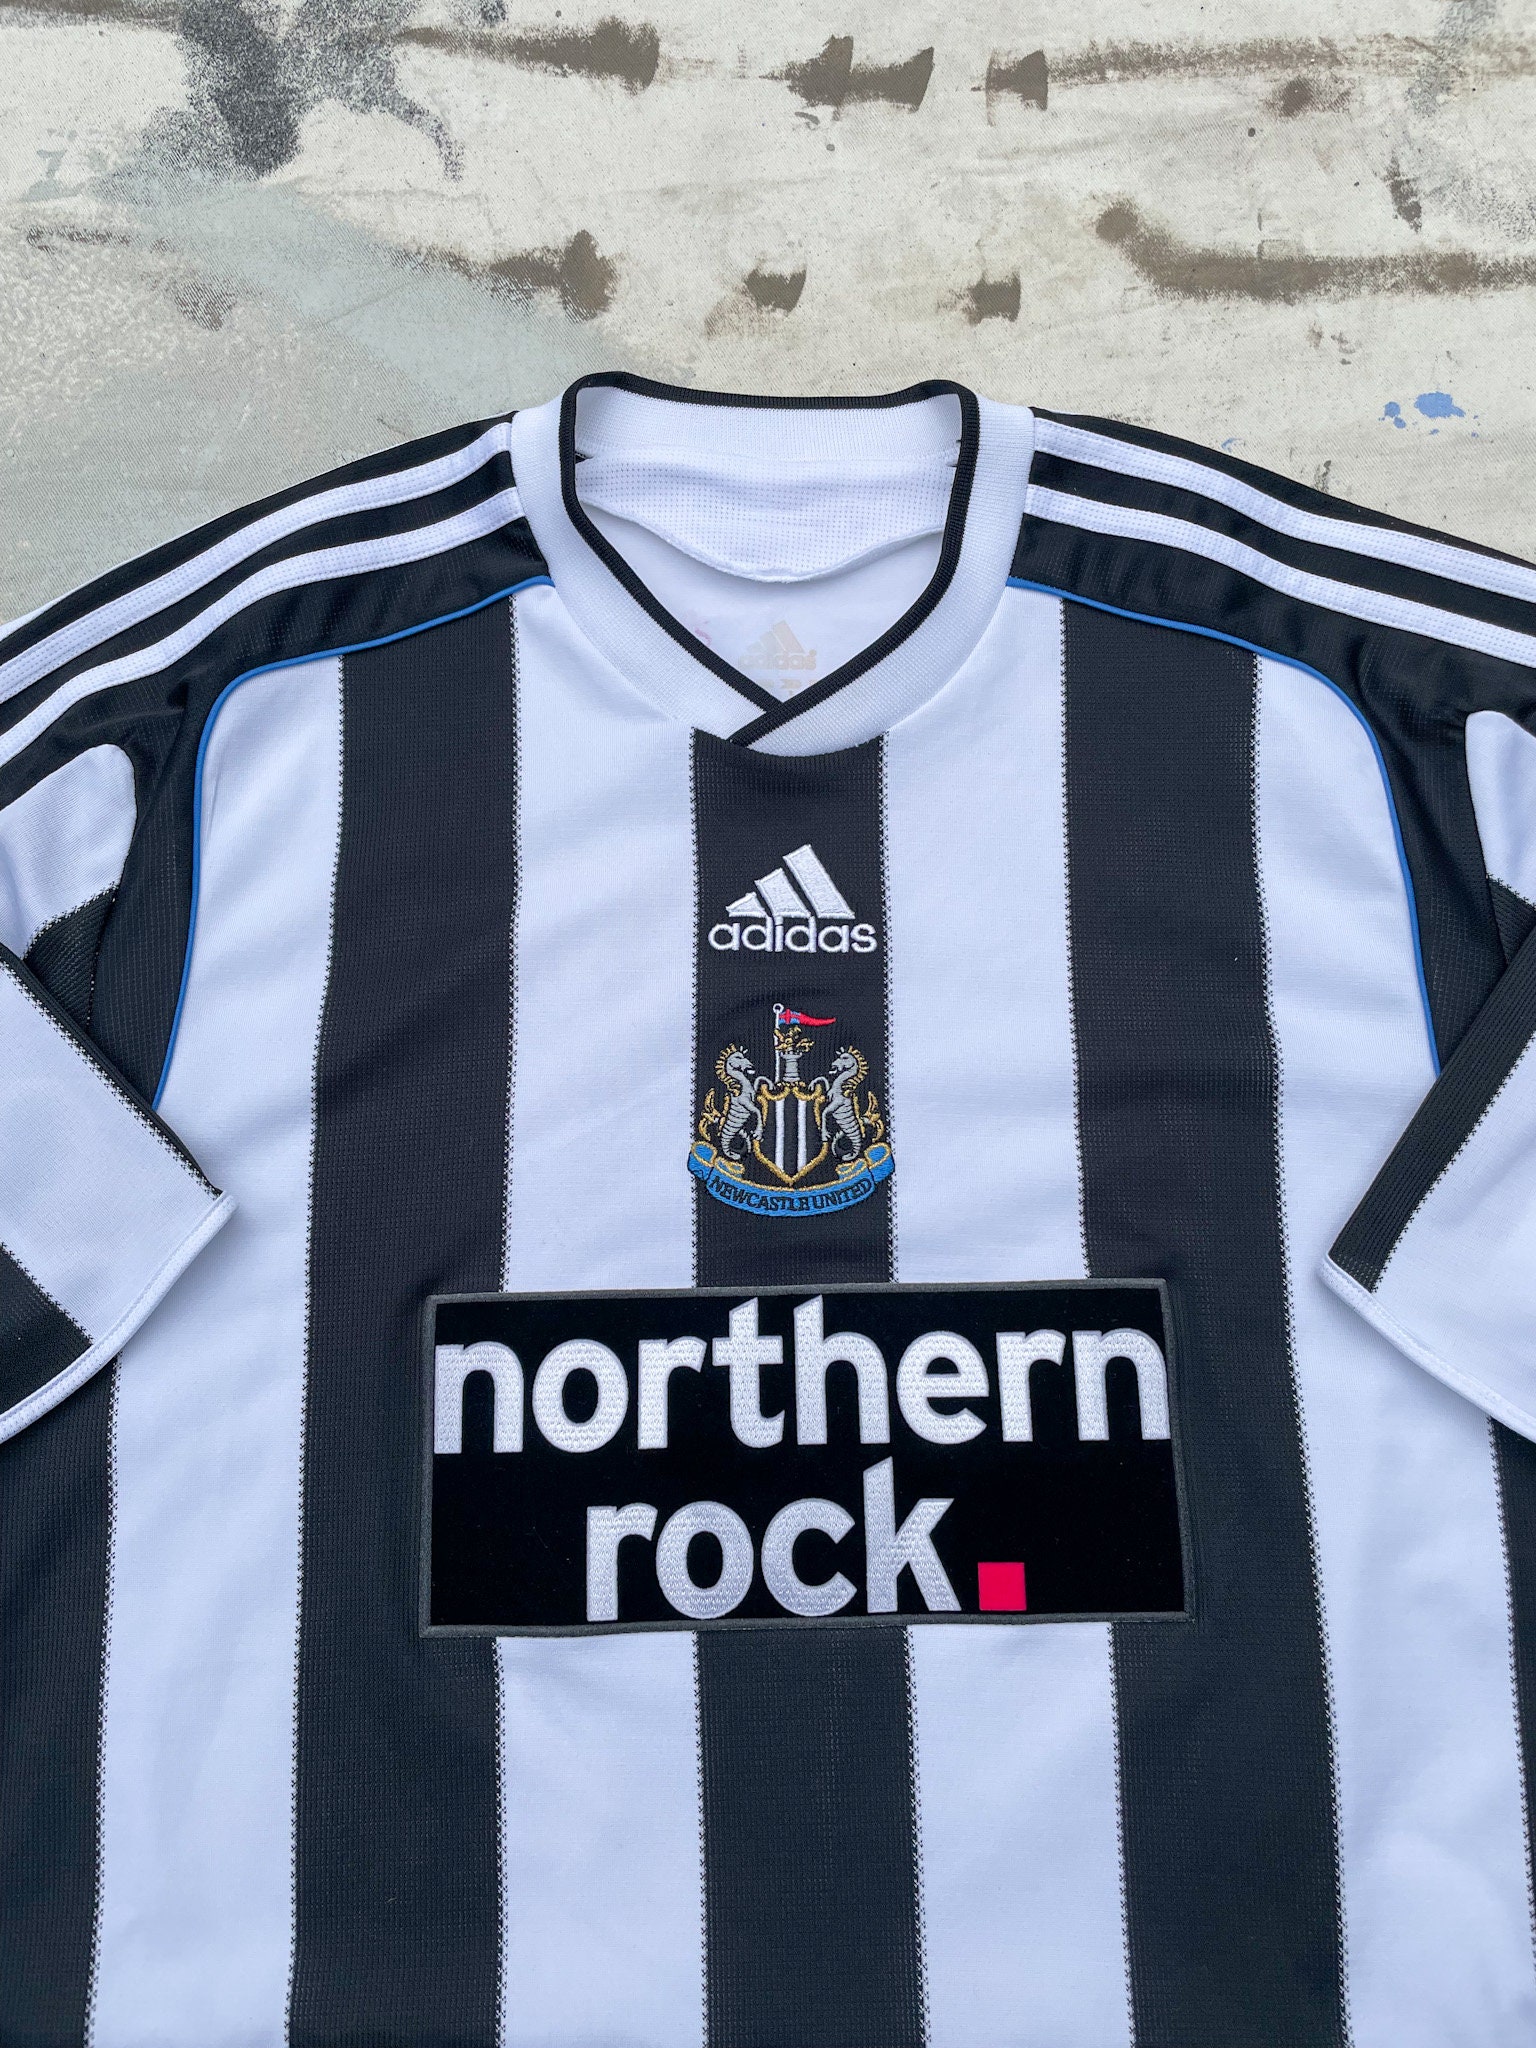 newcastle united northern rock shirt